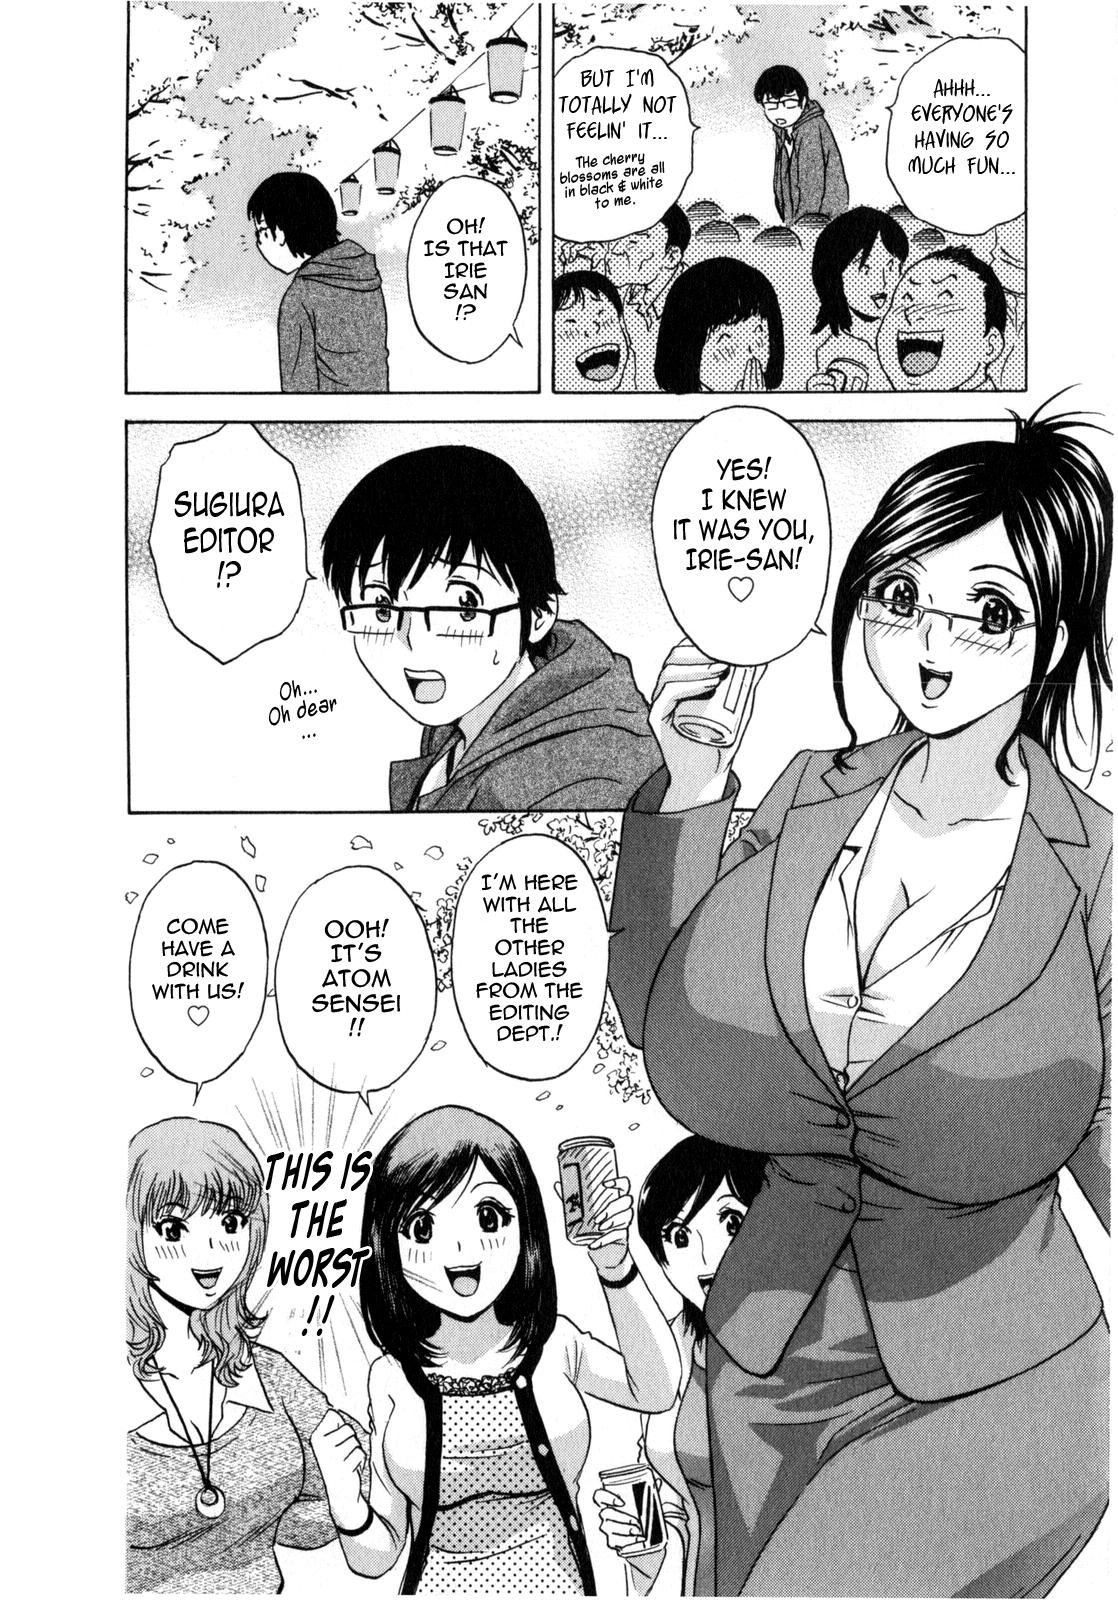 [Hidemaru] Life with Married Women Just Like a Manga 2 - Ch. 1-6 [English] {Tadanohito} 72